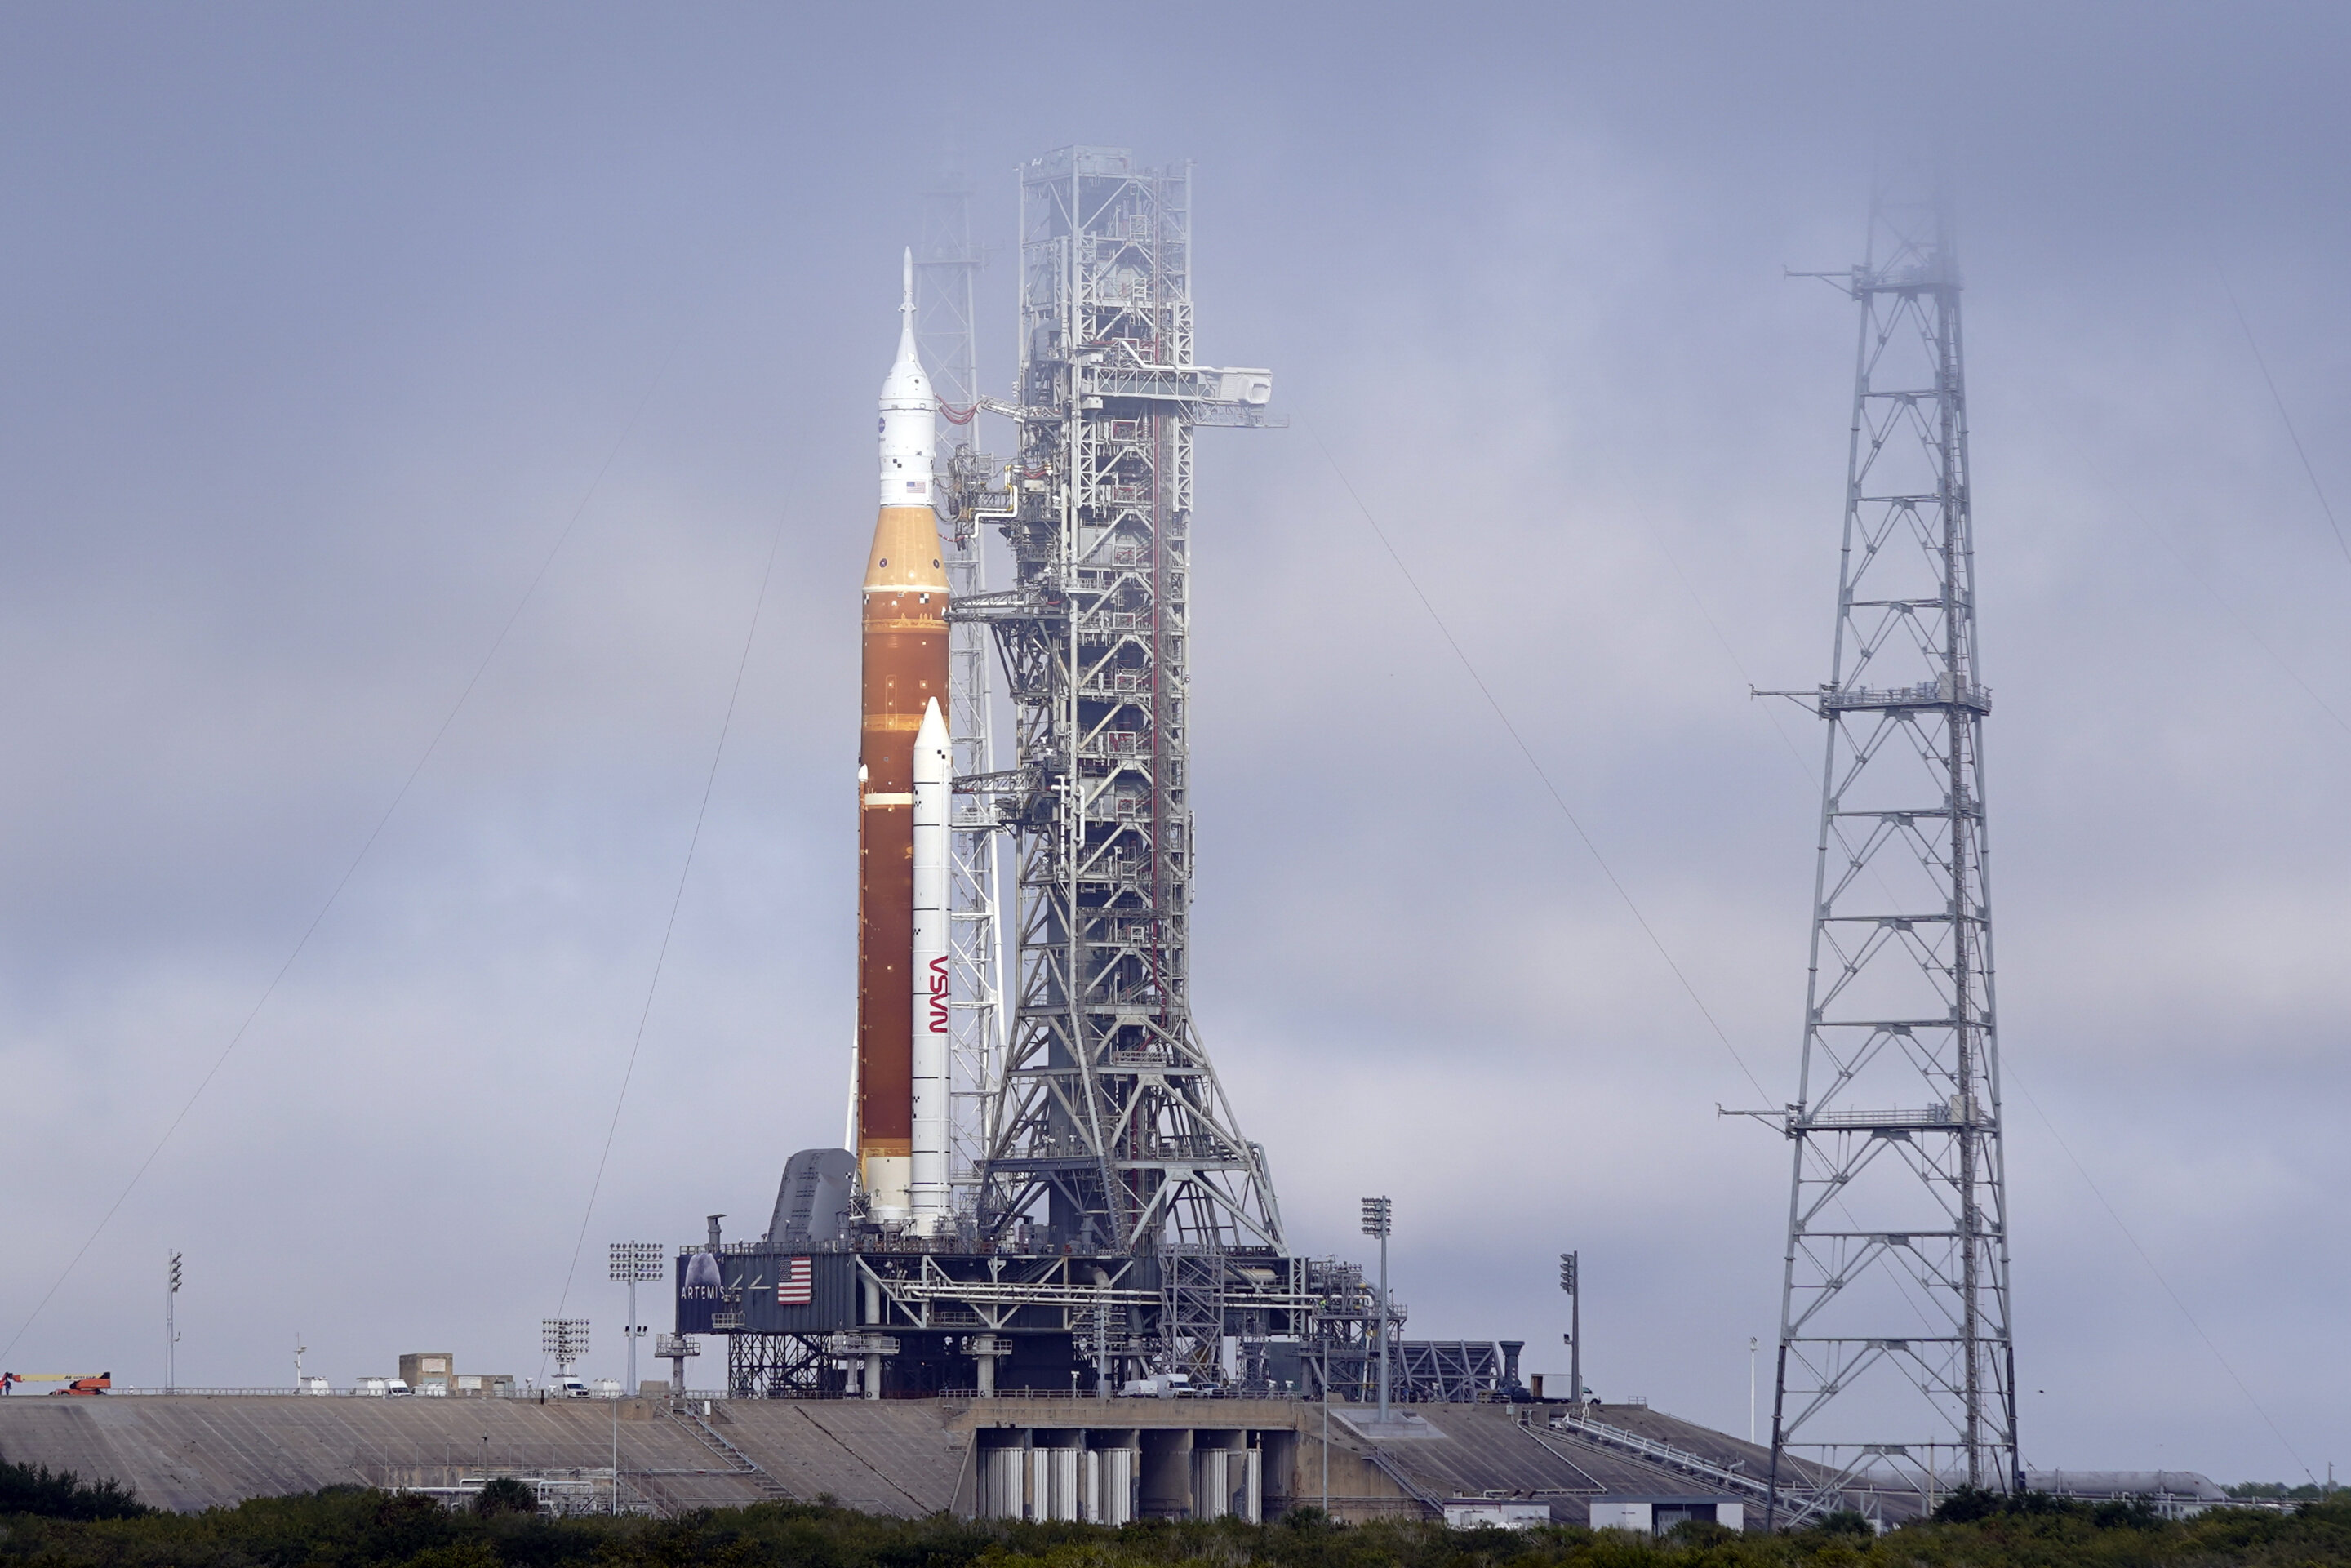 Fuel leak thwarts NASA's dress rehearsal for moon rocket